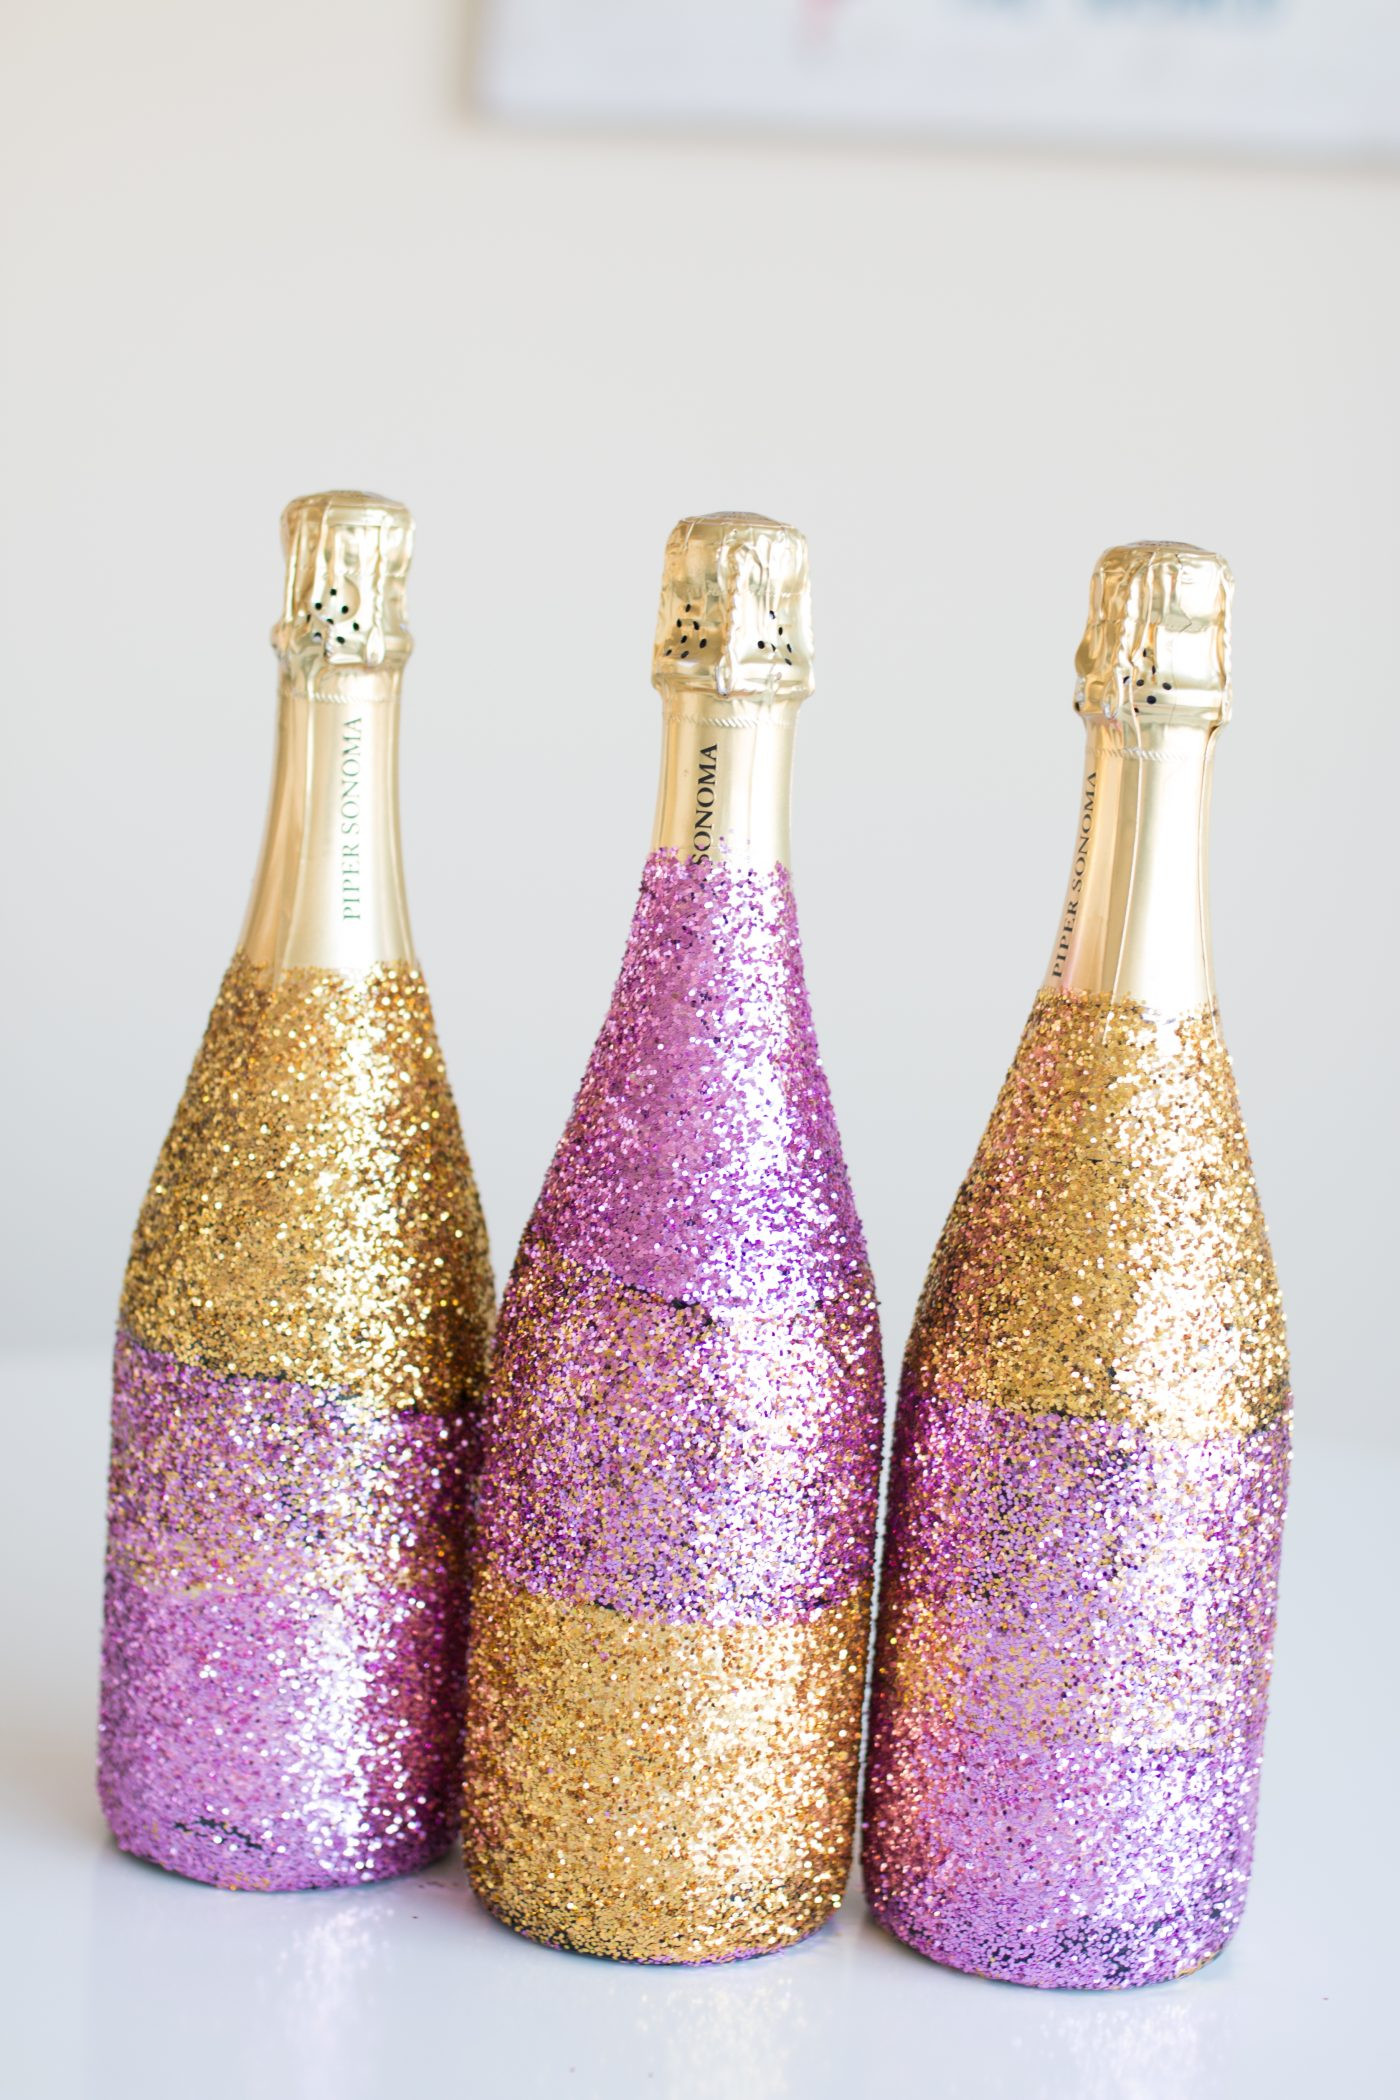 Best ideas about Glitter Wine Bottles DIY
. Save or Pin DIY Glitter Ombré Champagne Bottle Now.